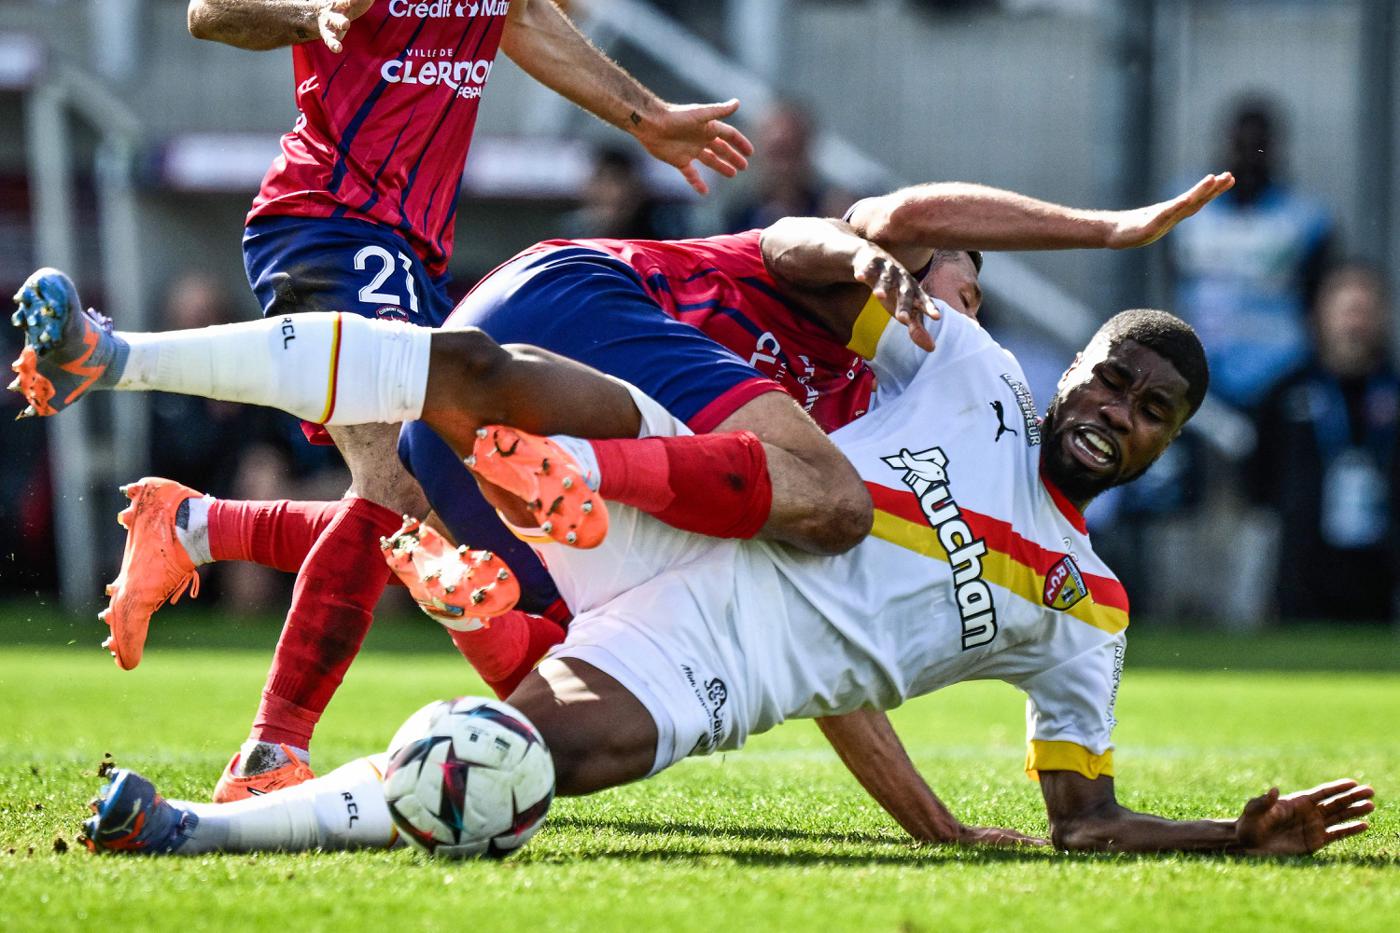 Clermont - Lans - 0:4. French Premier League, round 27. Match Review, Statistics